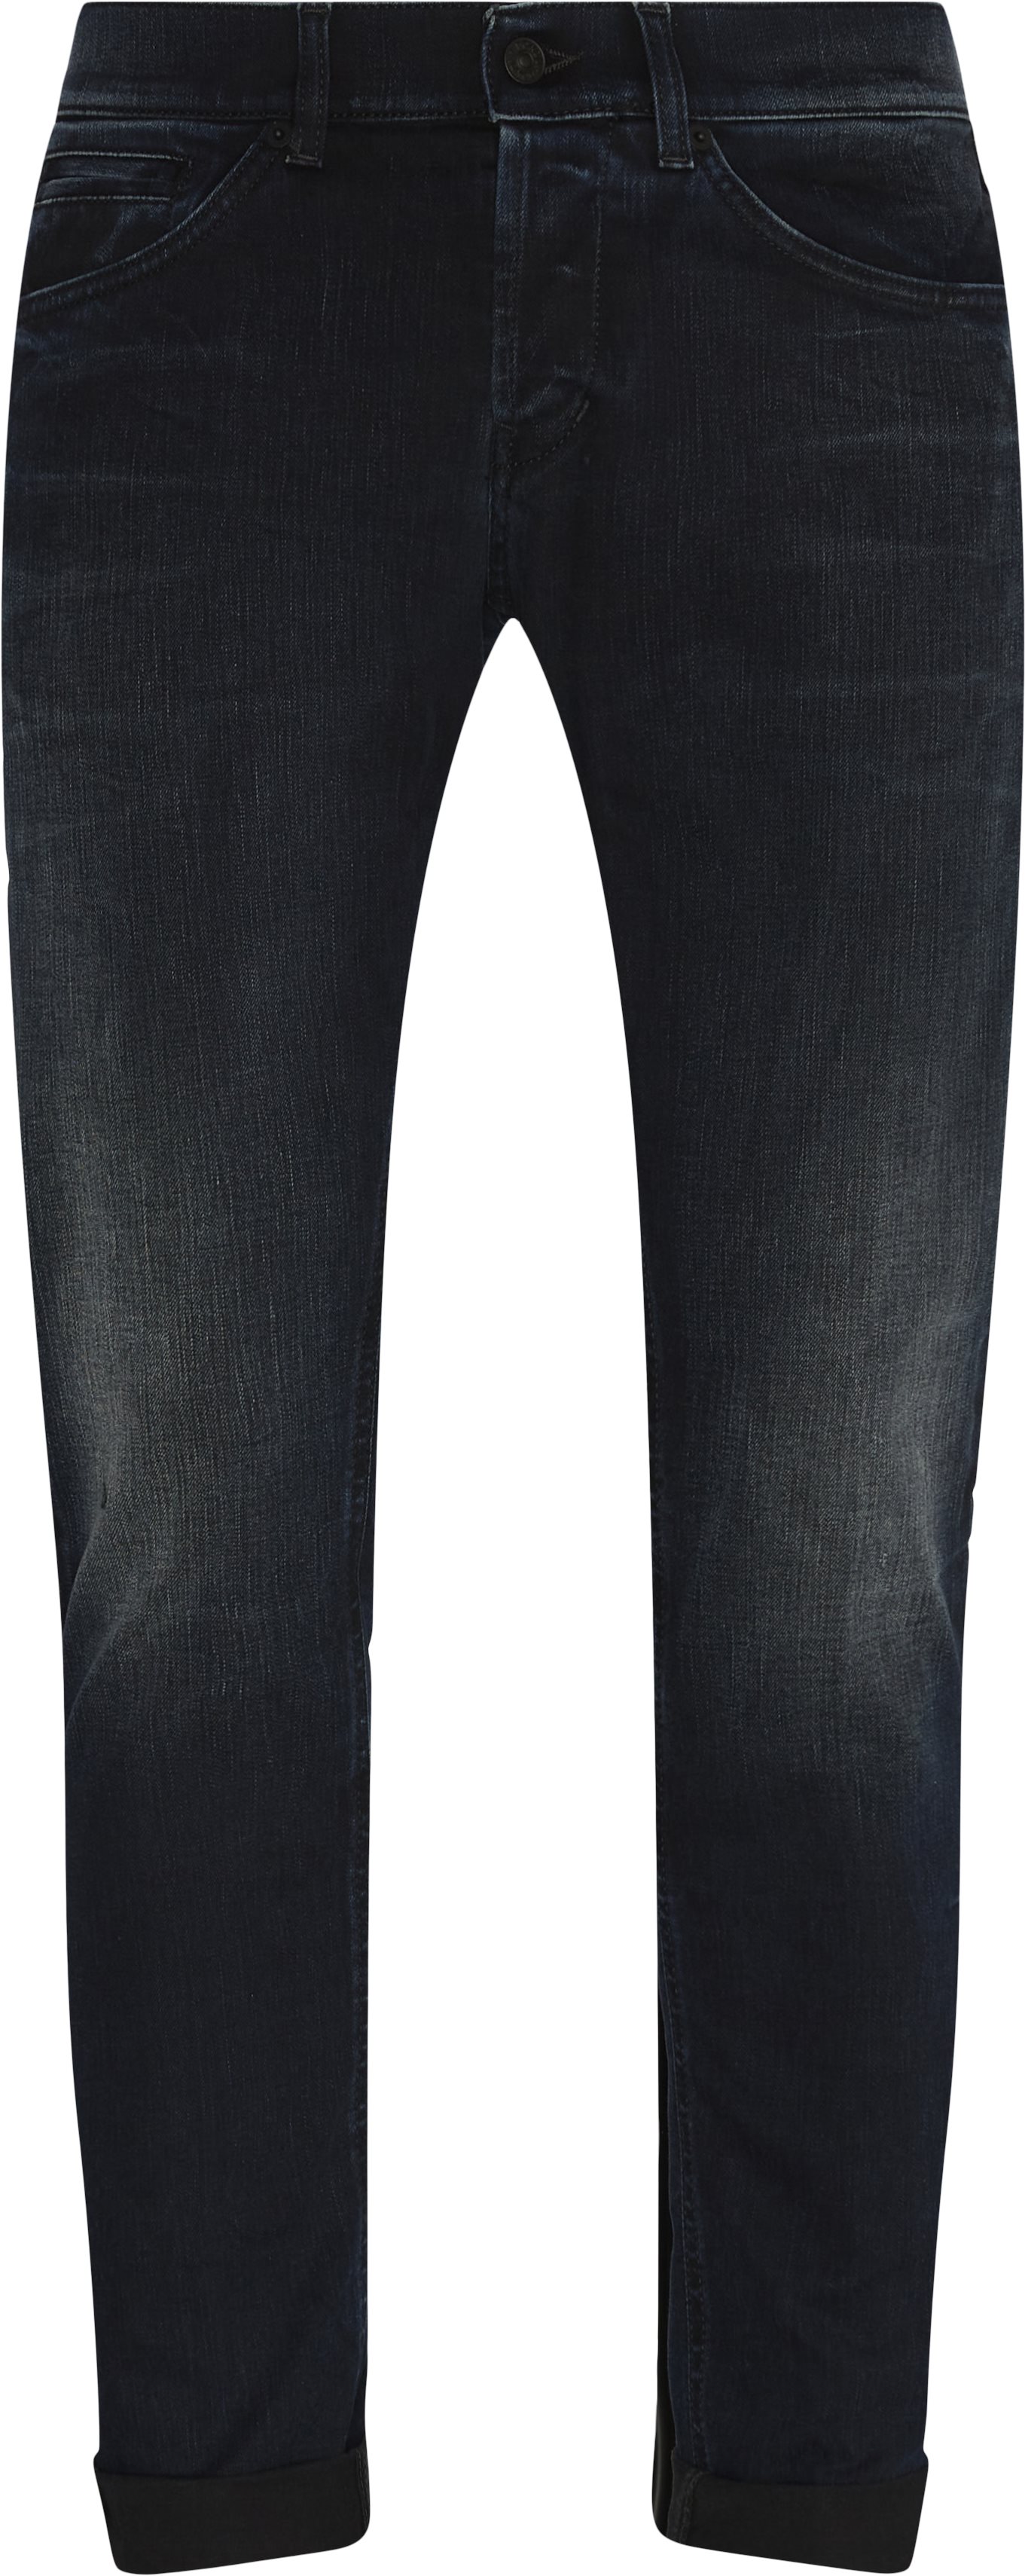 George Jeans - Jeans - Slim fit - Blå